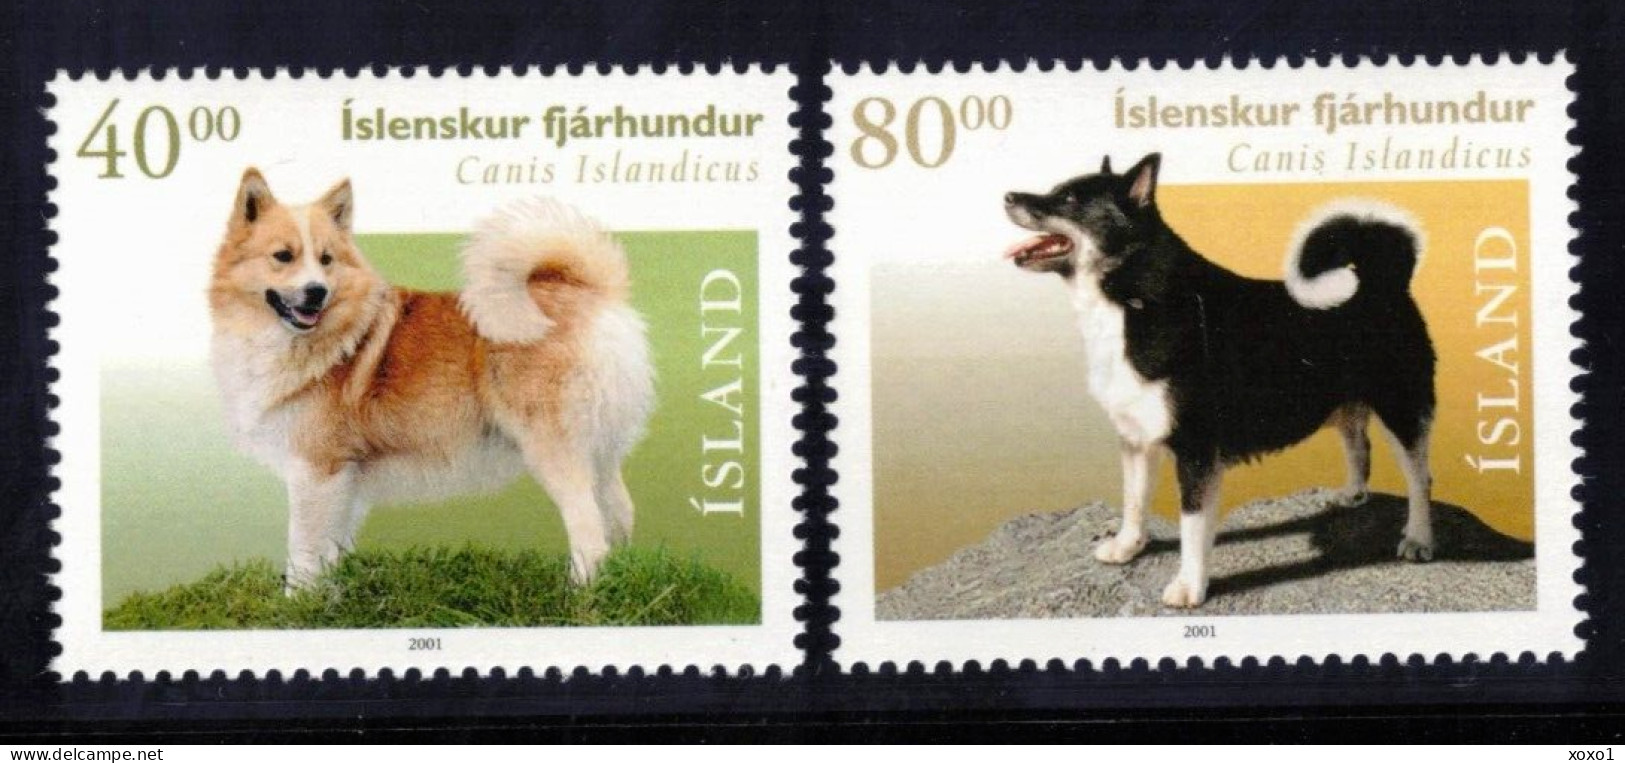 Iceland 2001 MiNr. 977 - 978 Island Mammals, Pets, Dogs, Icelandic Spitz 2v MNH** 4.00 € - Honden